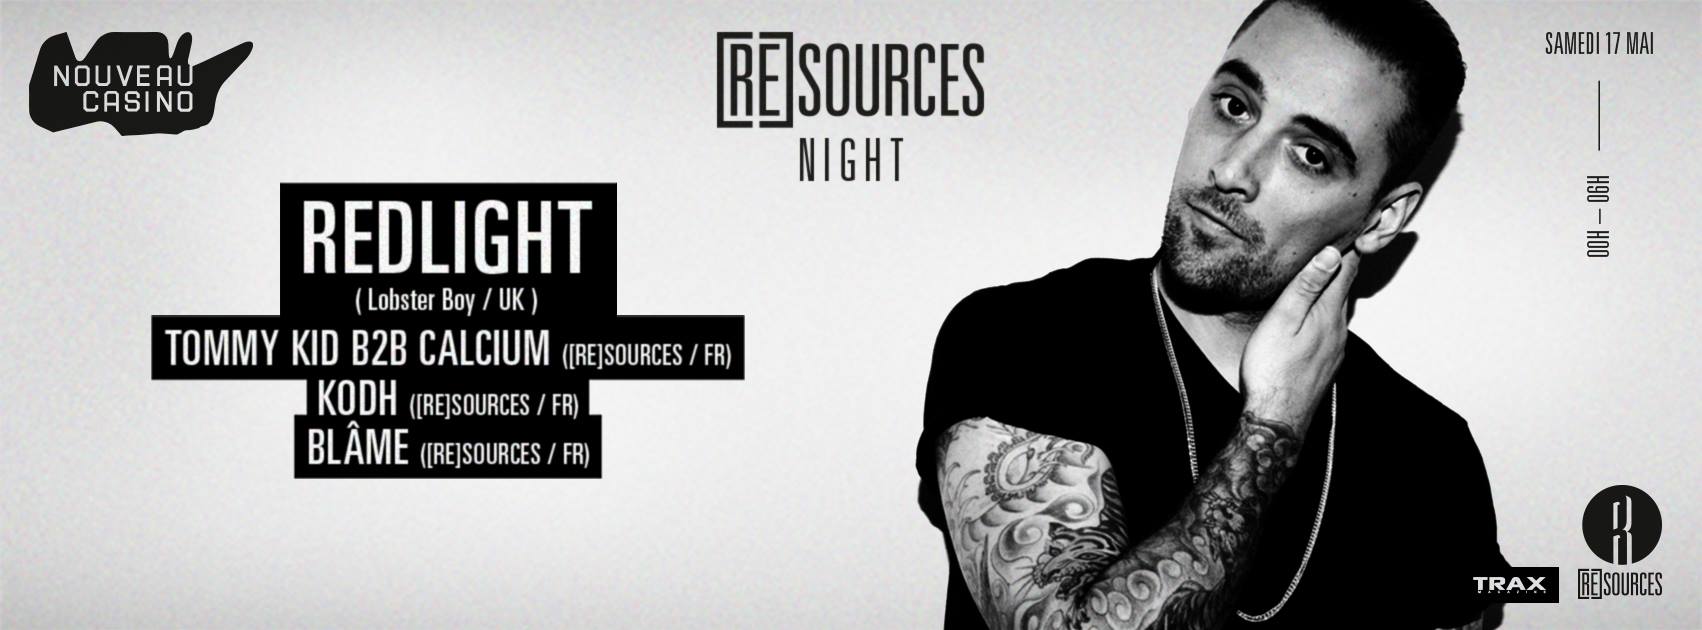 Redlight - Tommy Kid B2B Calcium Kodh Resources Night